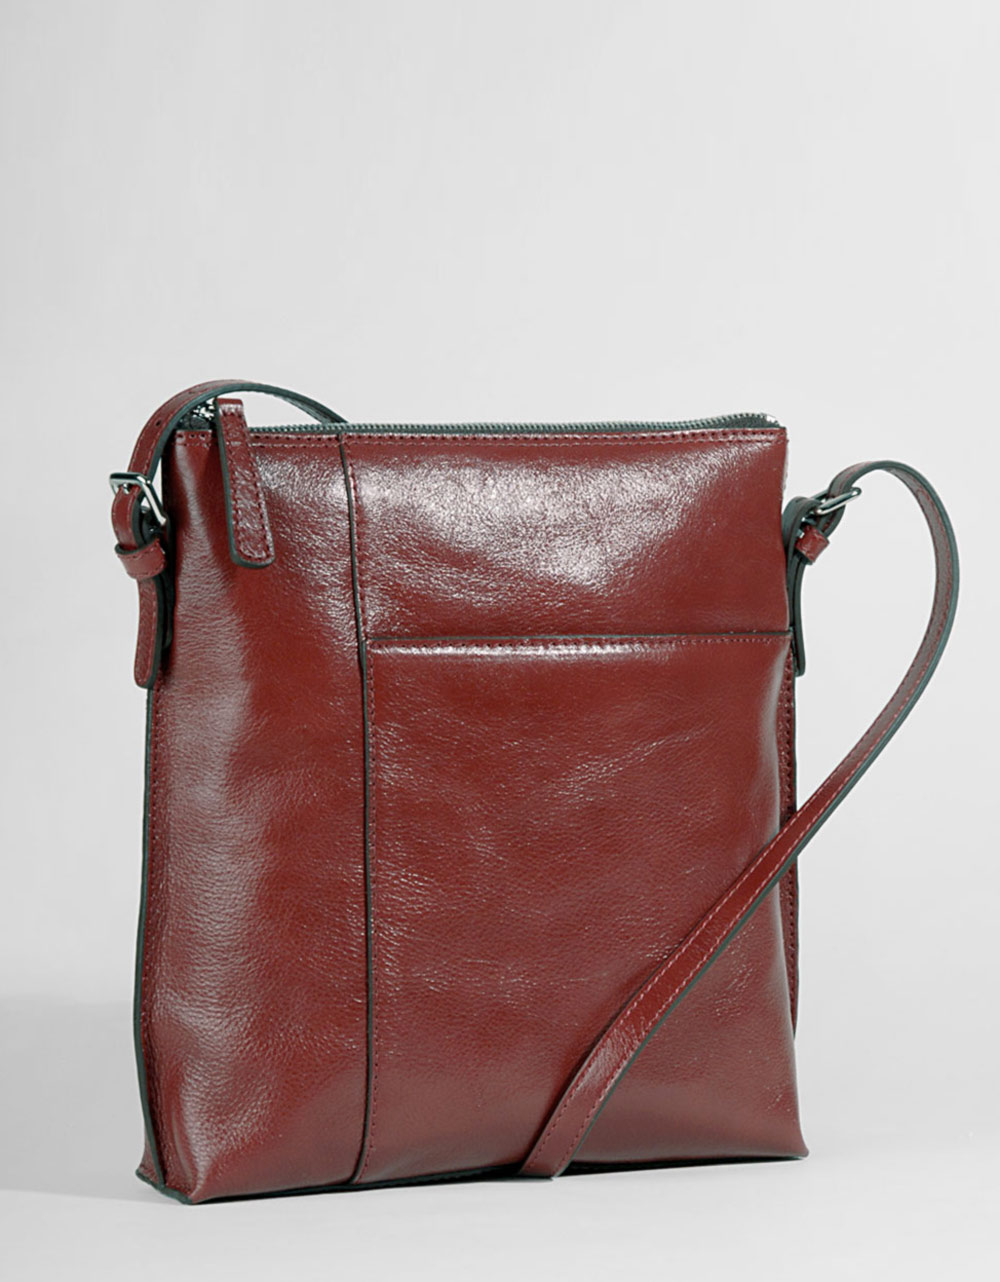 Hobo International Alessa Leather Cross-body Bag in Red - Lyst